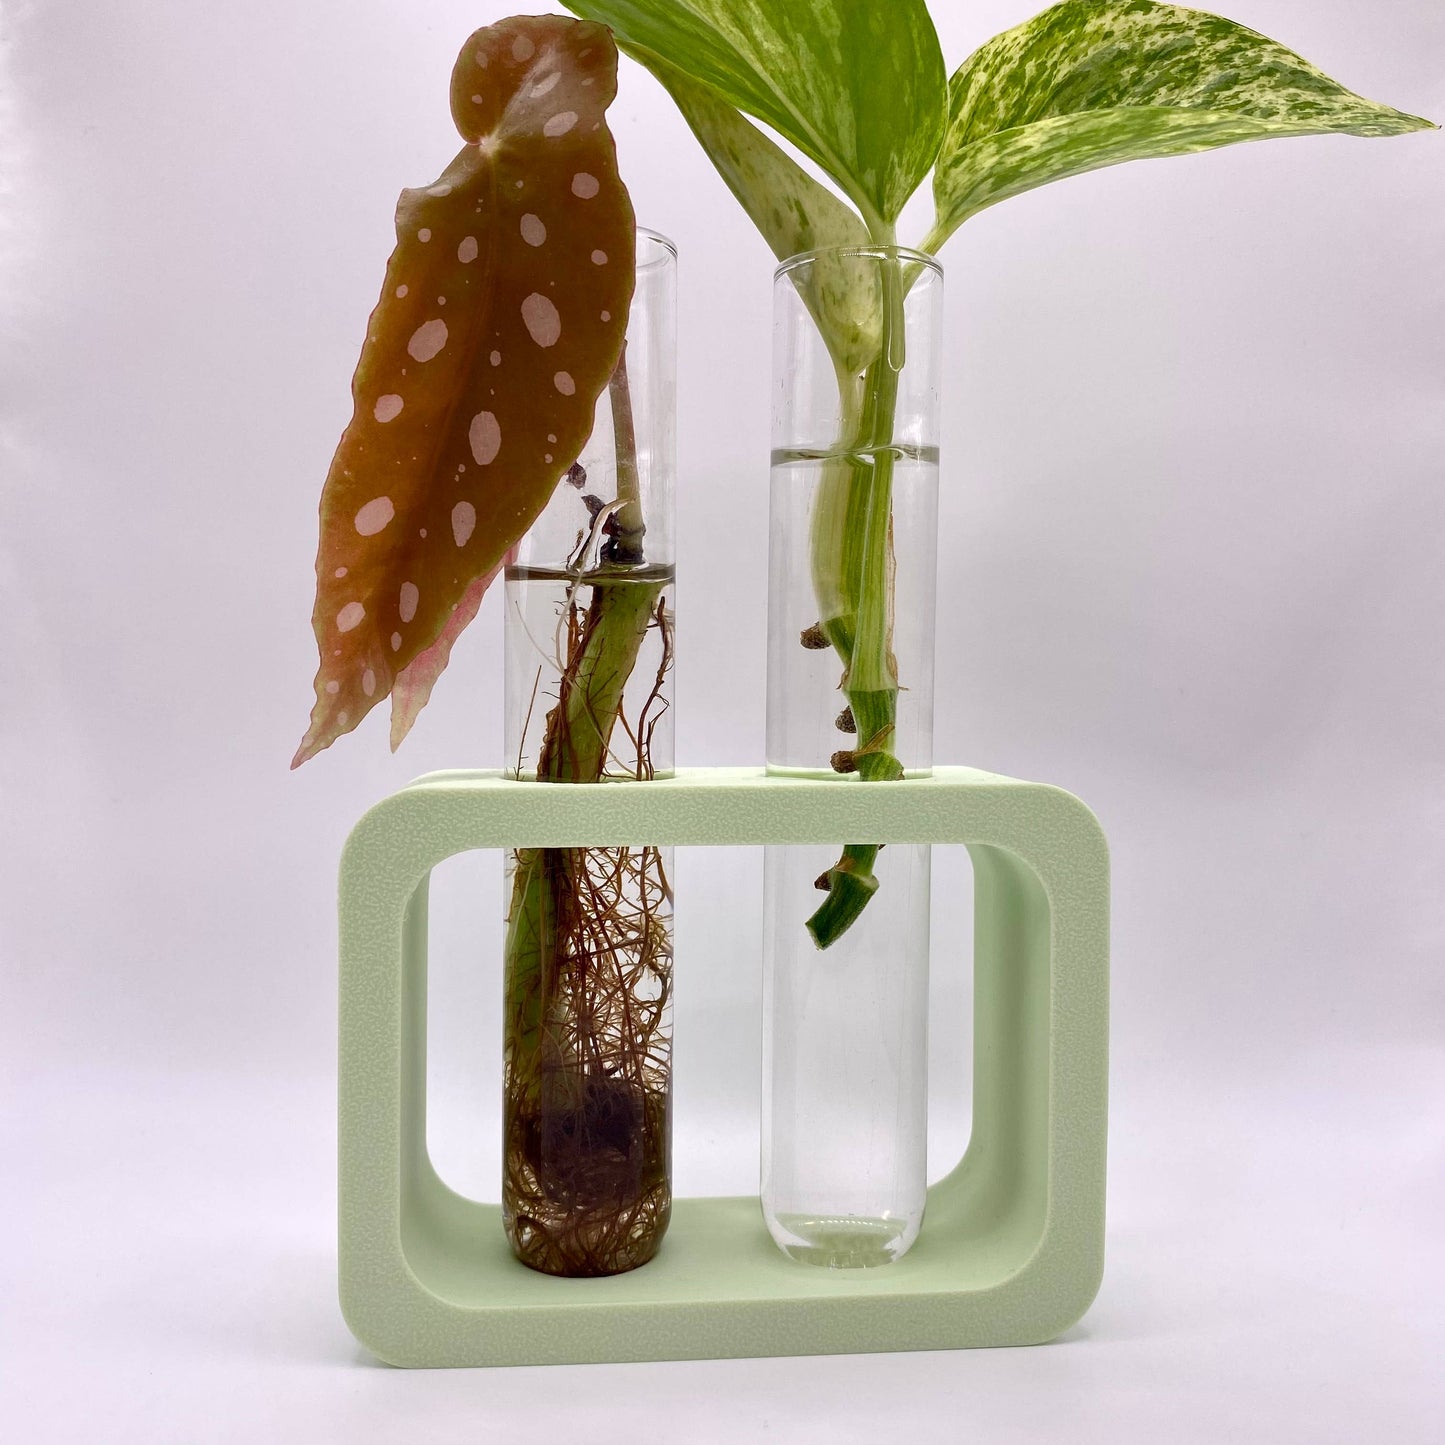 Plant Voyage - 3D Printed Dual Propagation Station, Plant Accessory: Minty Matcha